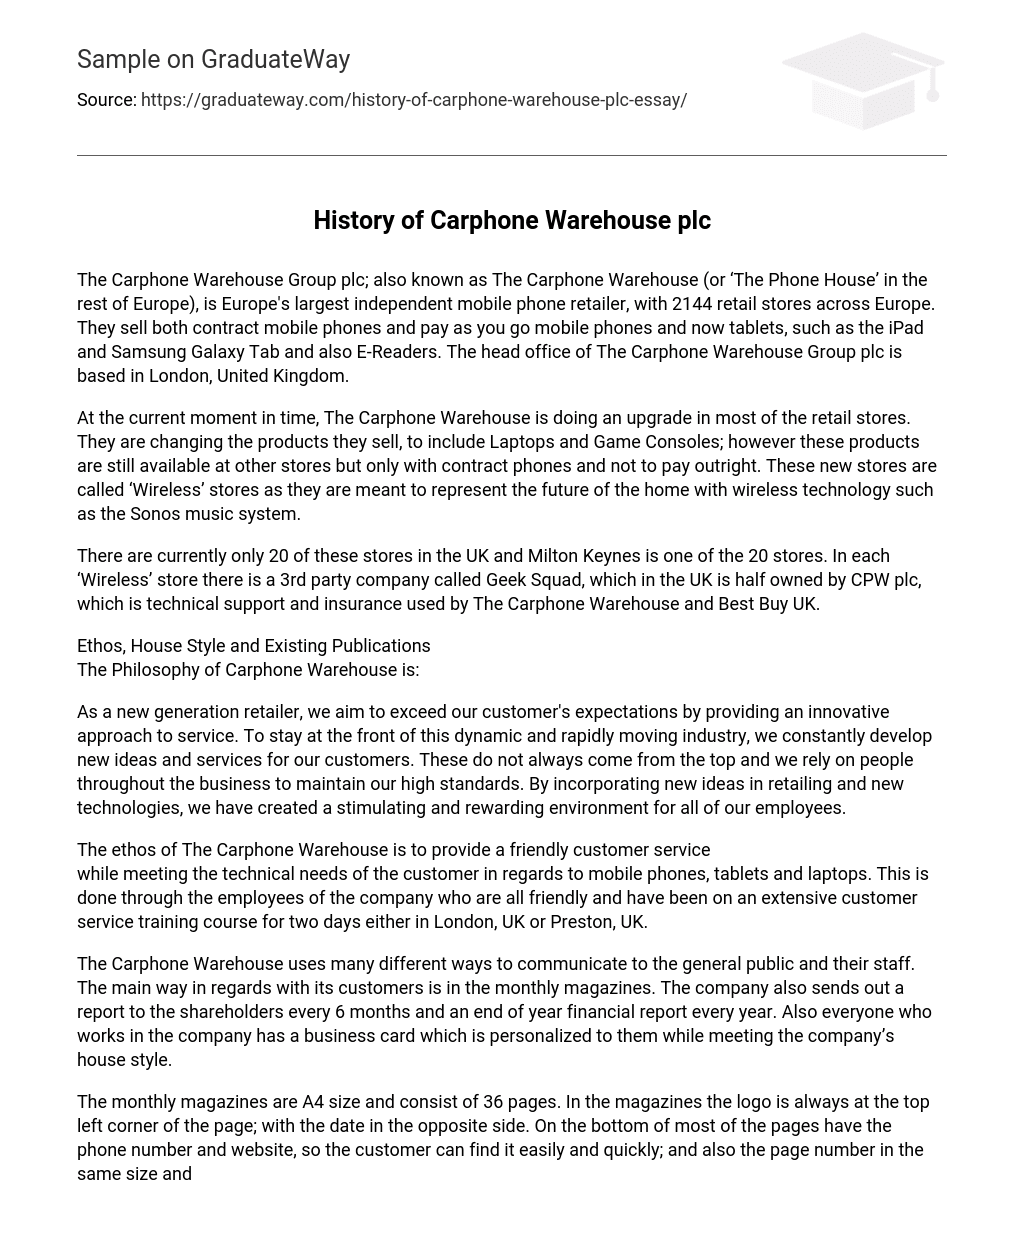 History of Carphone Warehouse plc